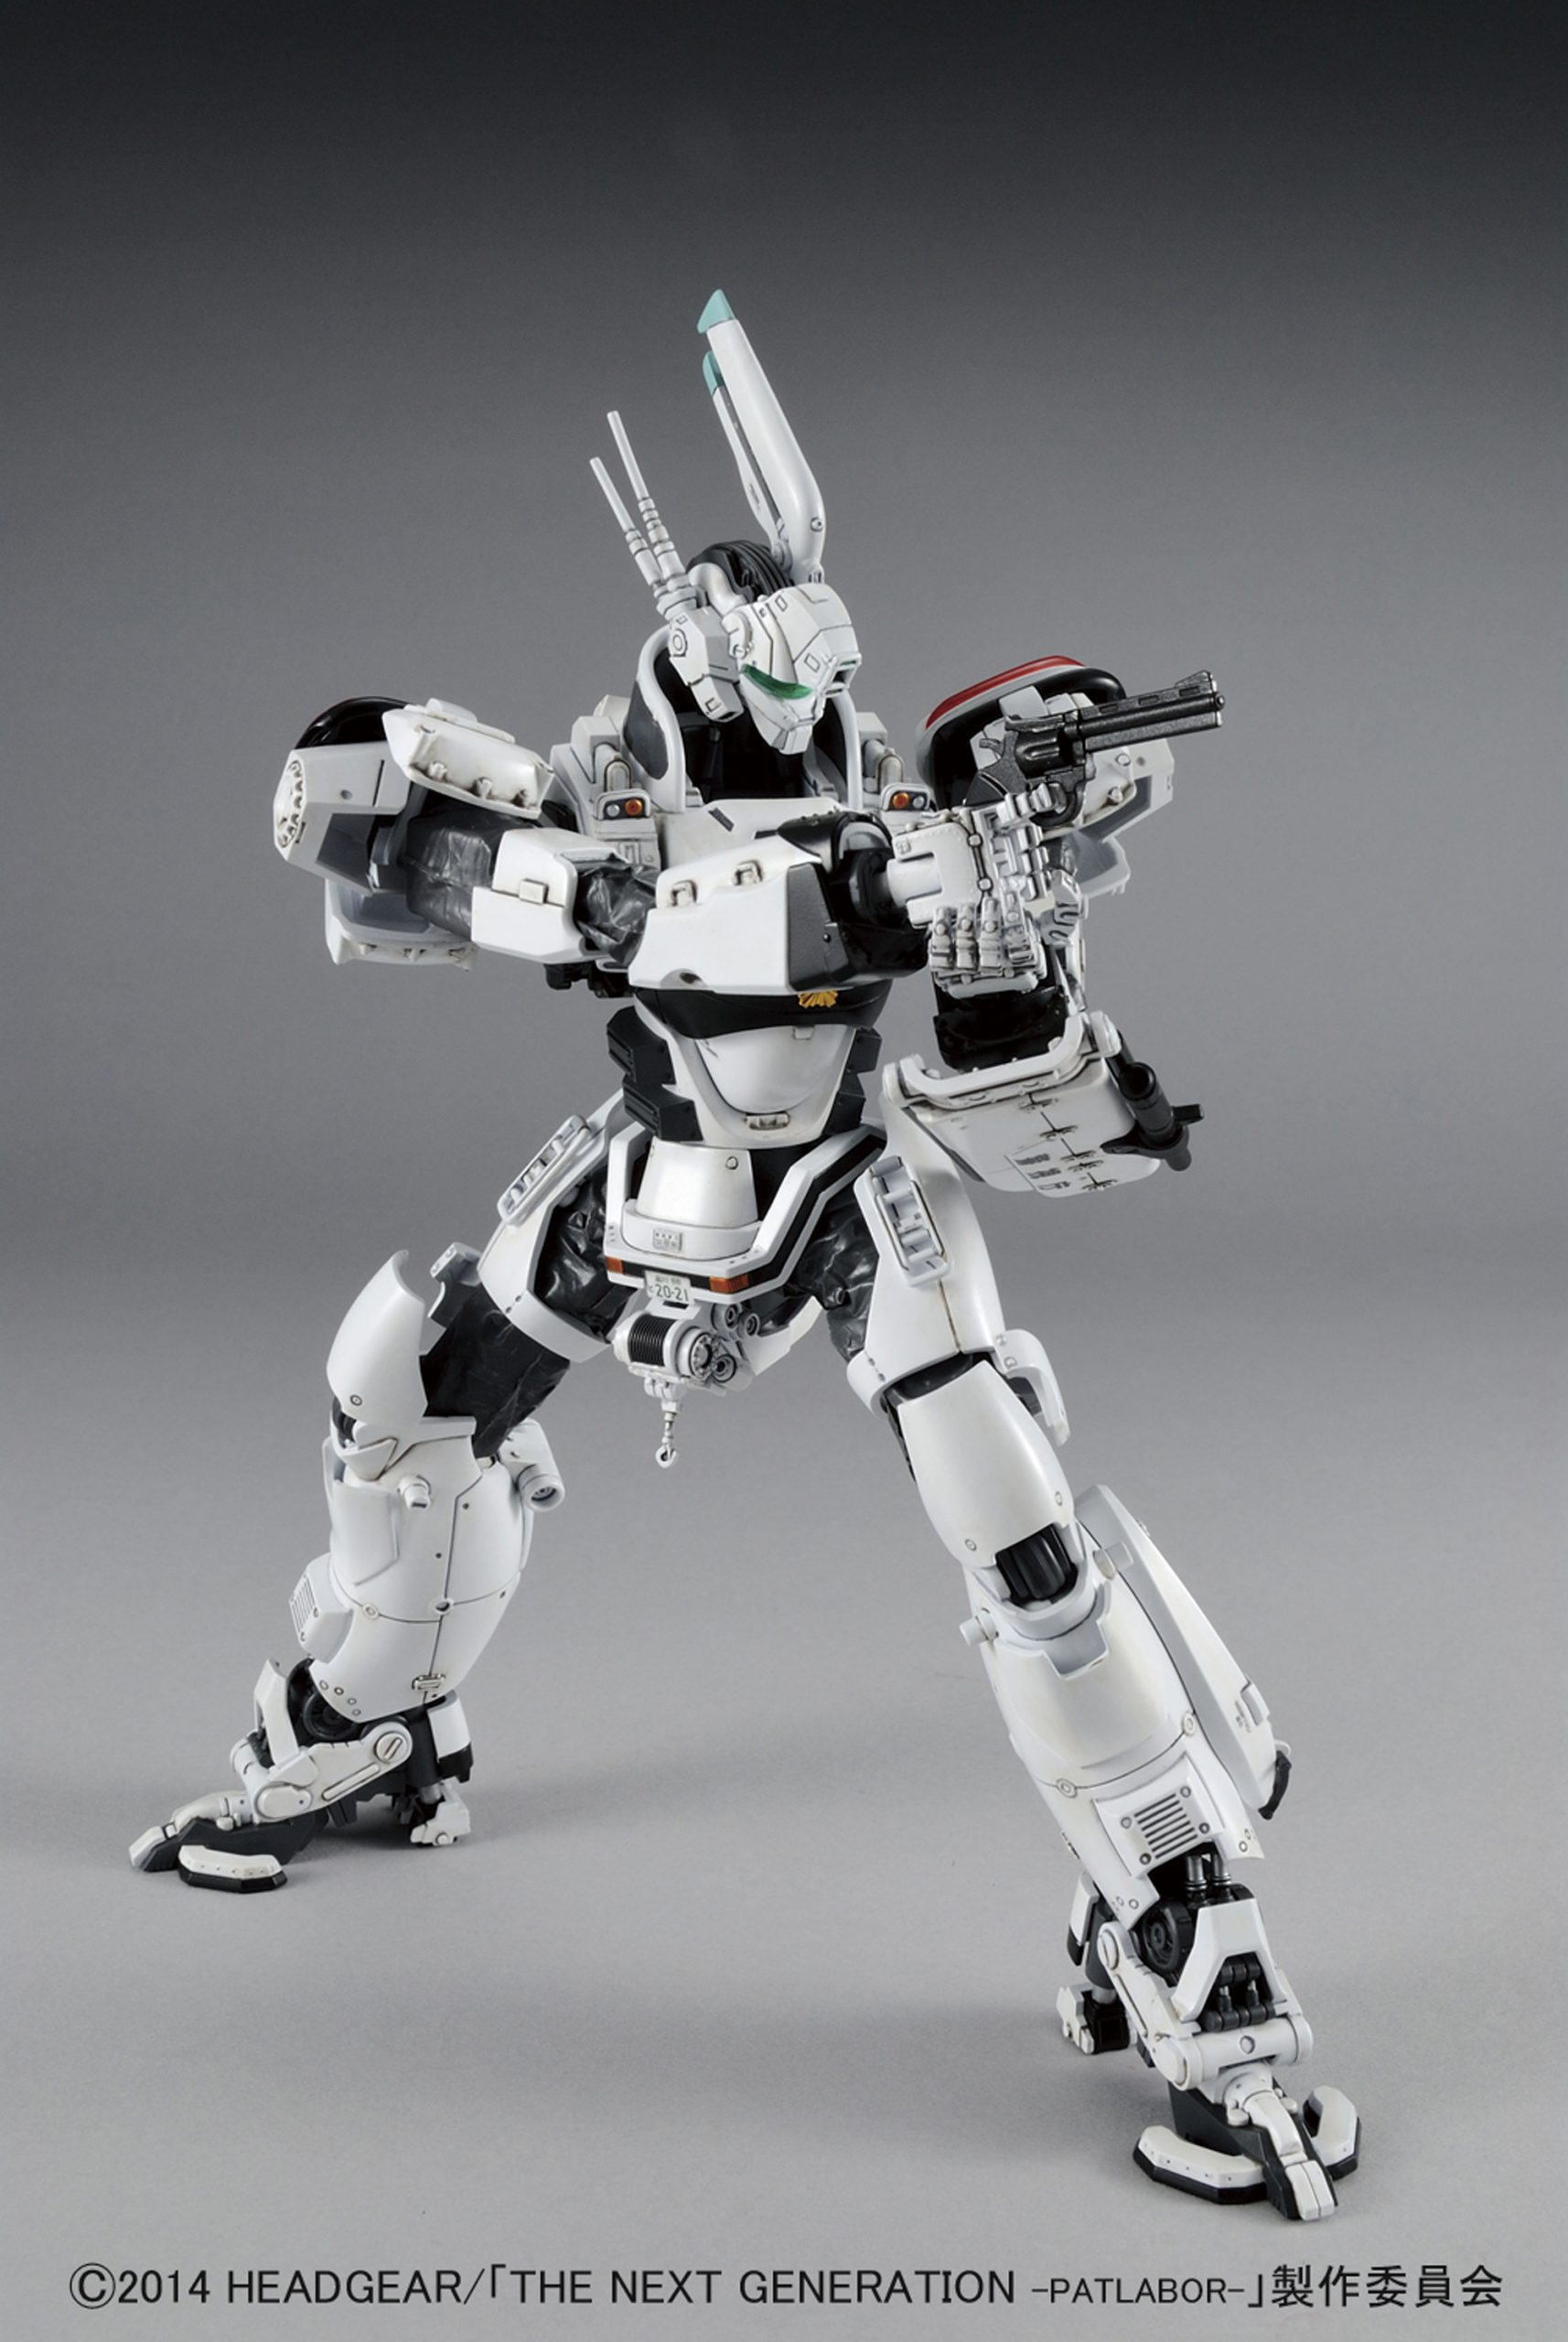 1/48 AV-98 Ingram The Next Generation Patlabor - Gundam Pros